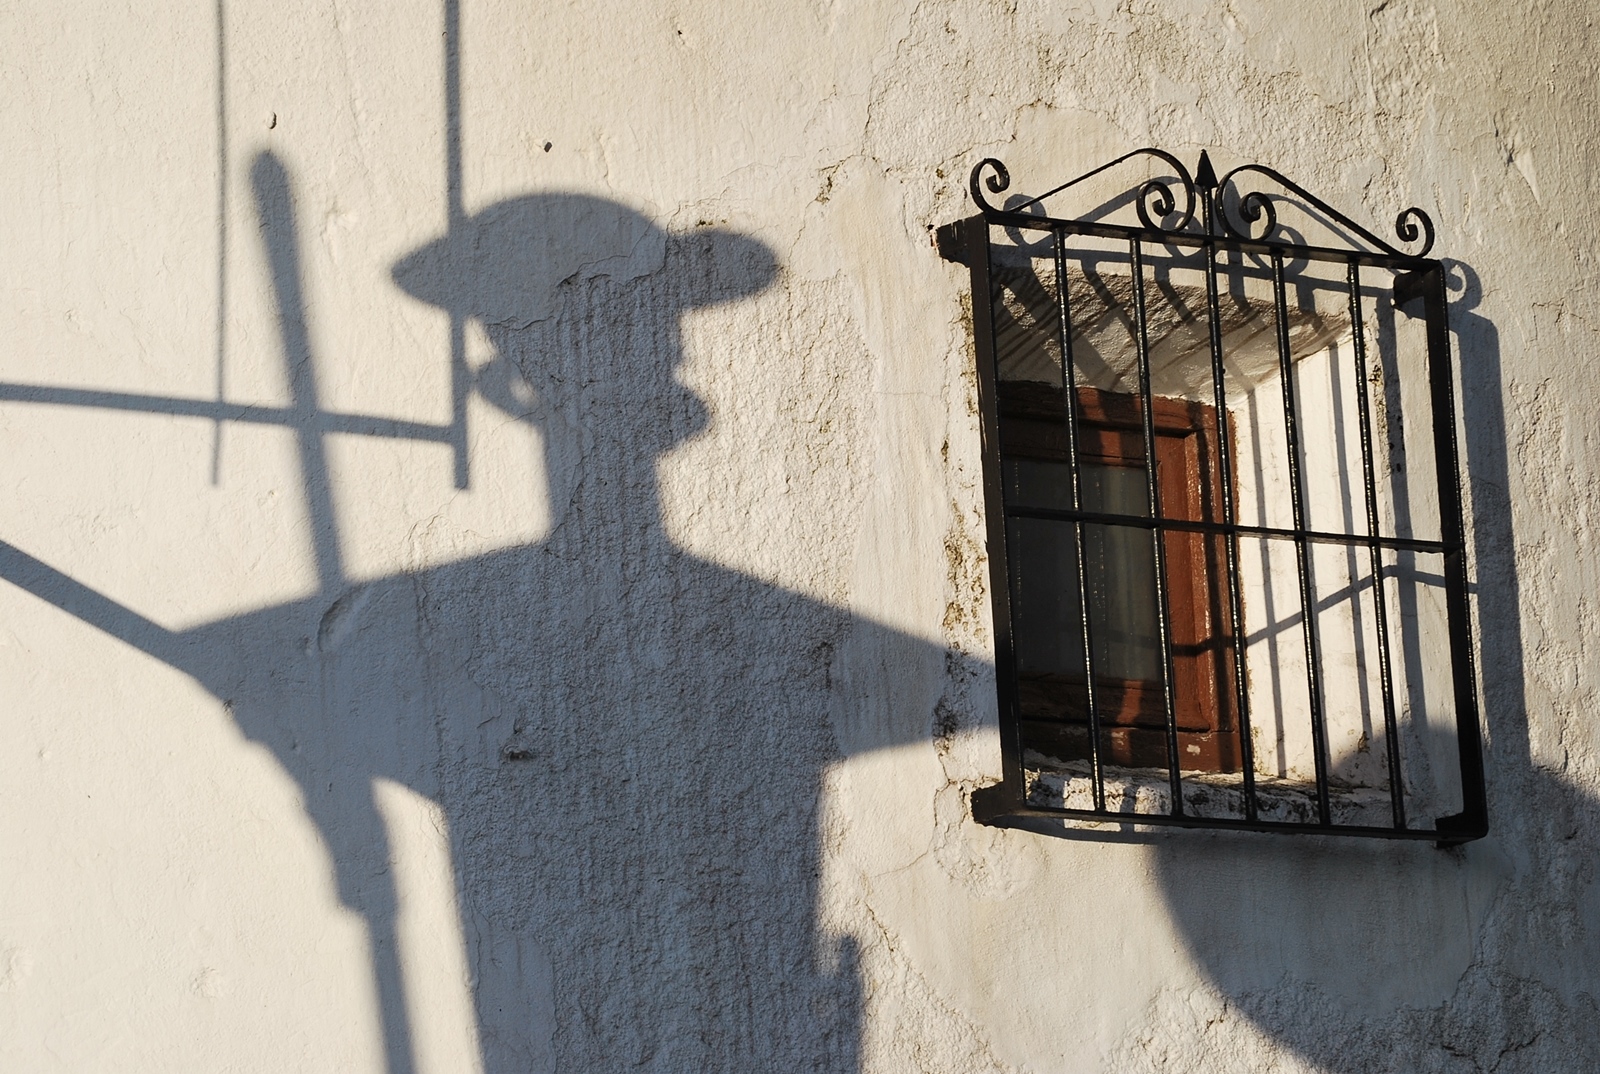 La sombra de Don Quijote. Autora, Maite Moya Díaz - Pintado